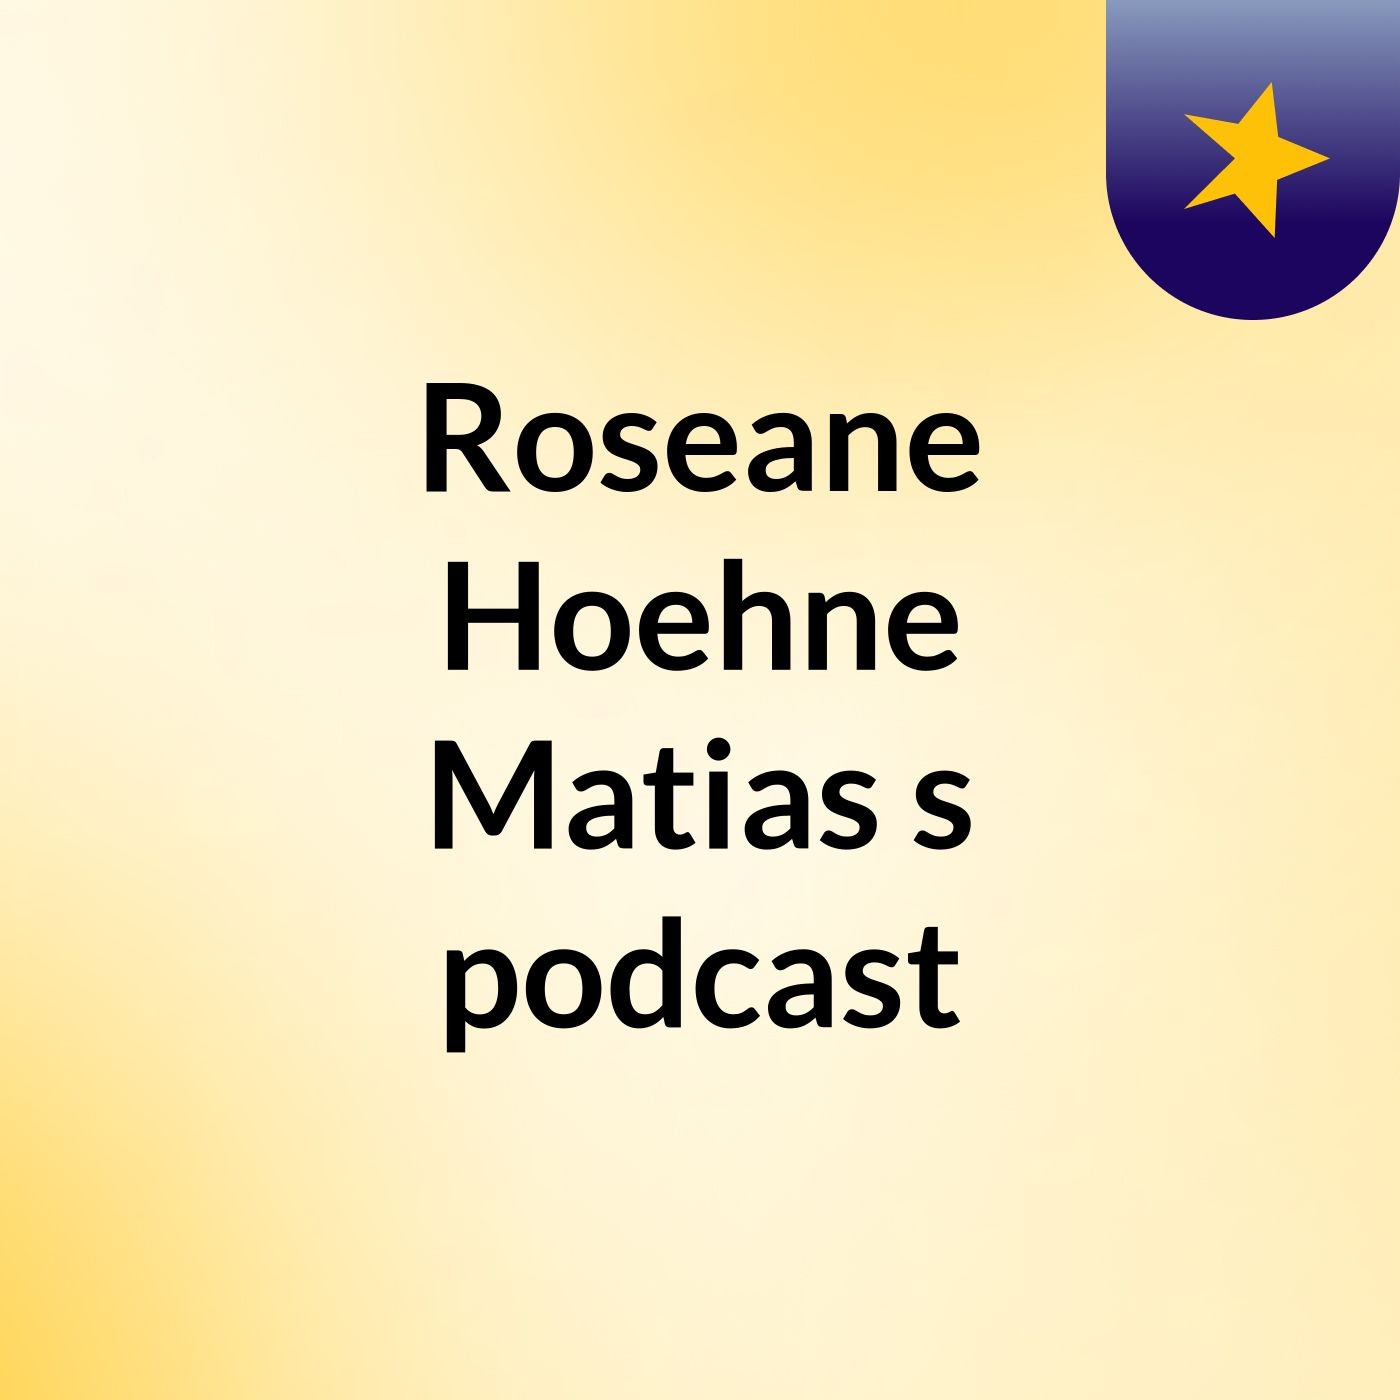 Roseane Hoehne Matias's podcast